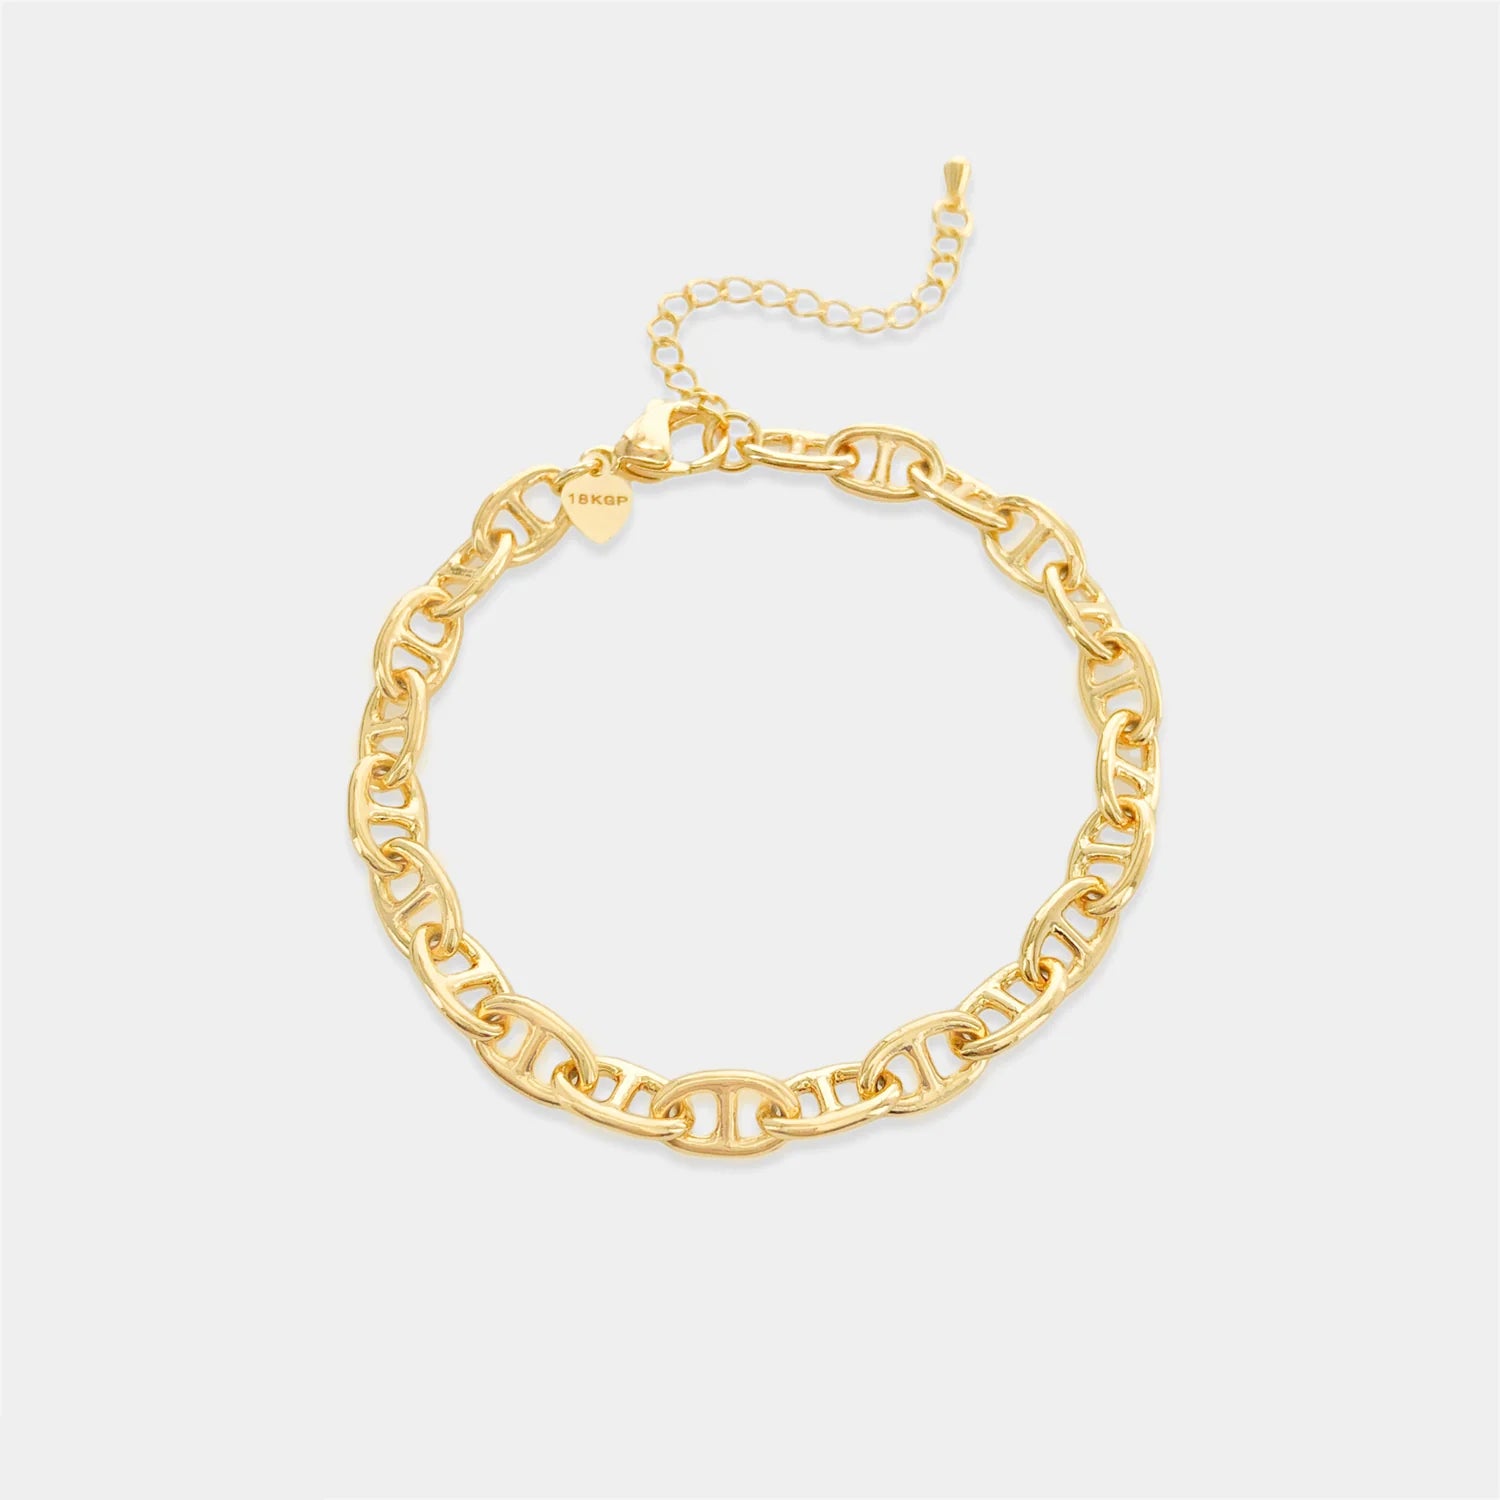 ABR024 - Mariner Chain Bracelet